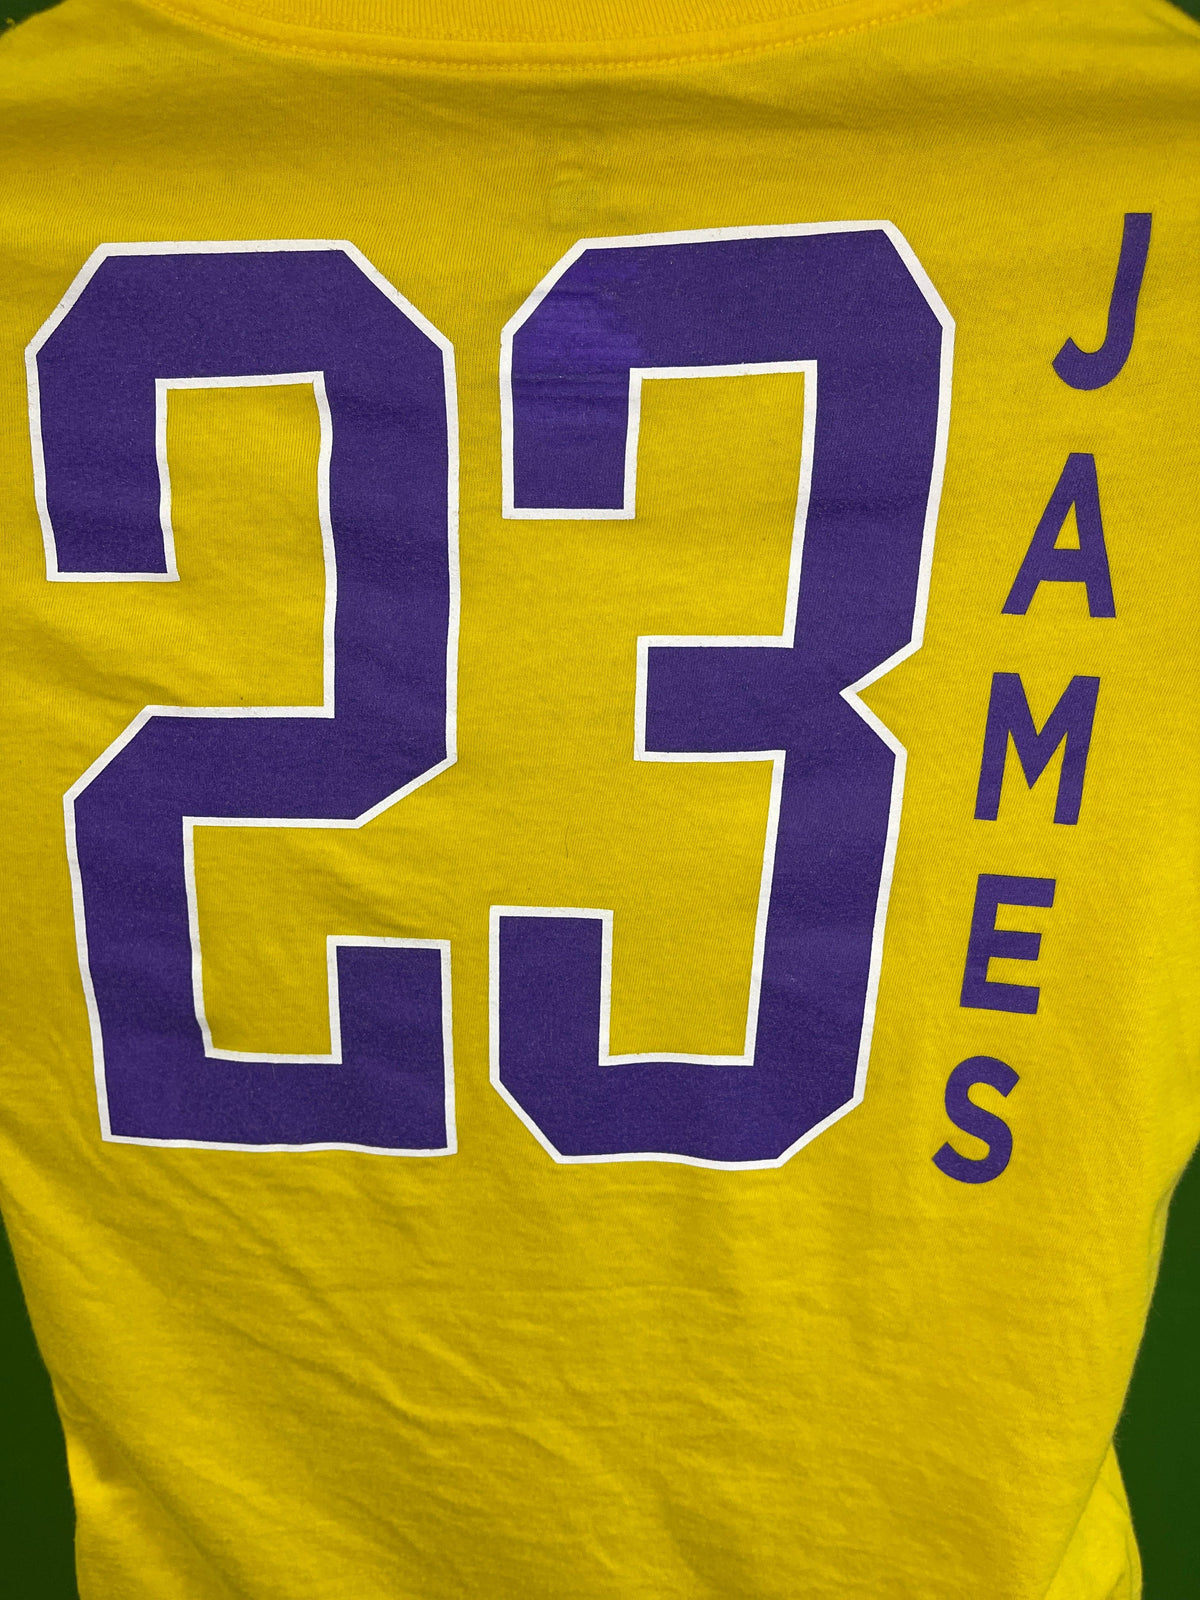 NBA Los Angeles Lakers LeBron James #23 Cotton Yellow T-Shirt Youth Medium